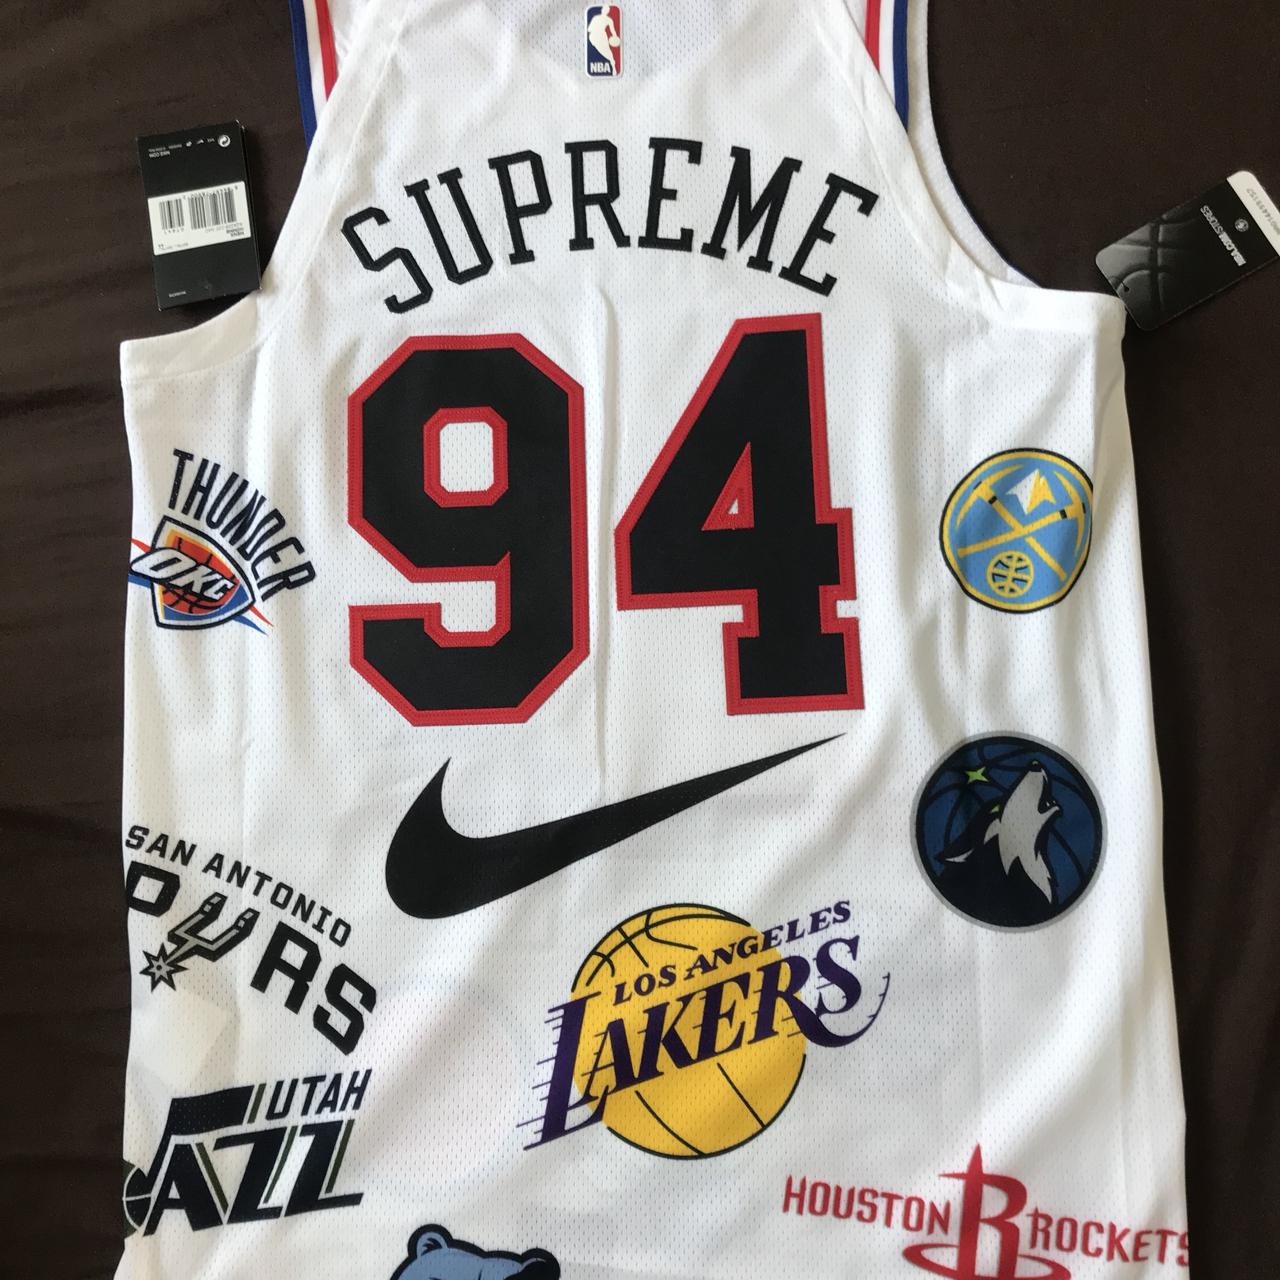 Supreme Nike/NBA Teams Authentic Jersey - Black - Used